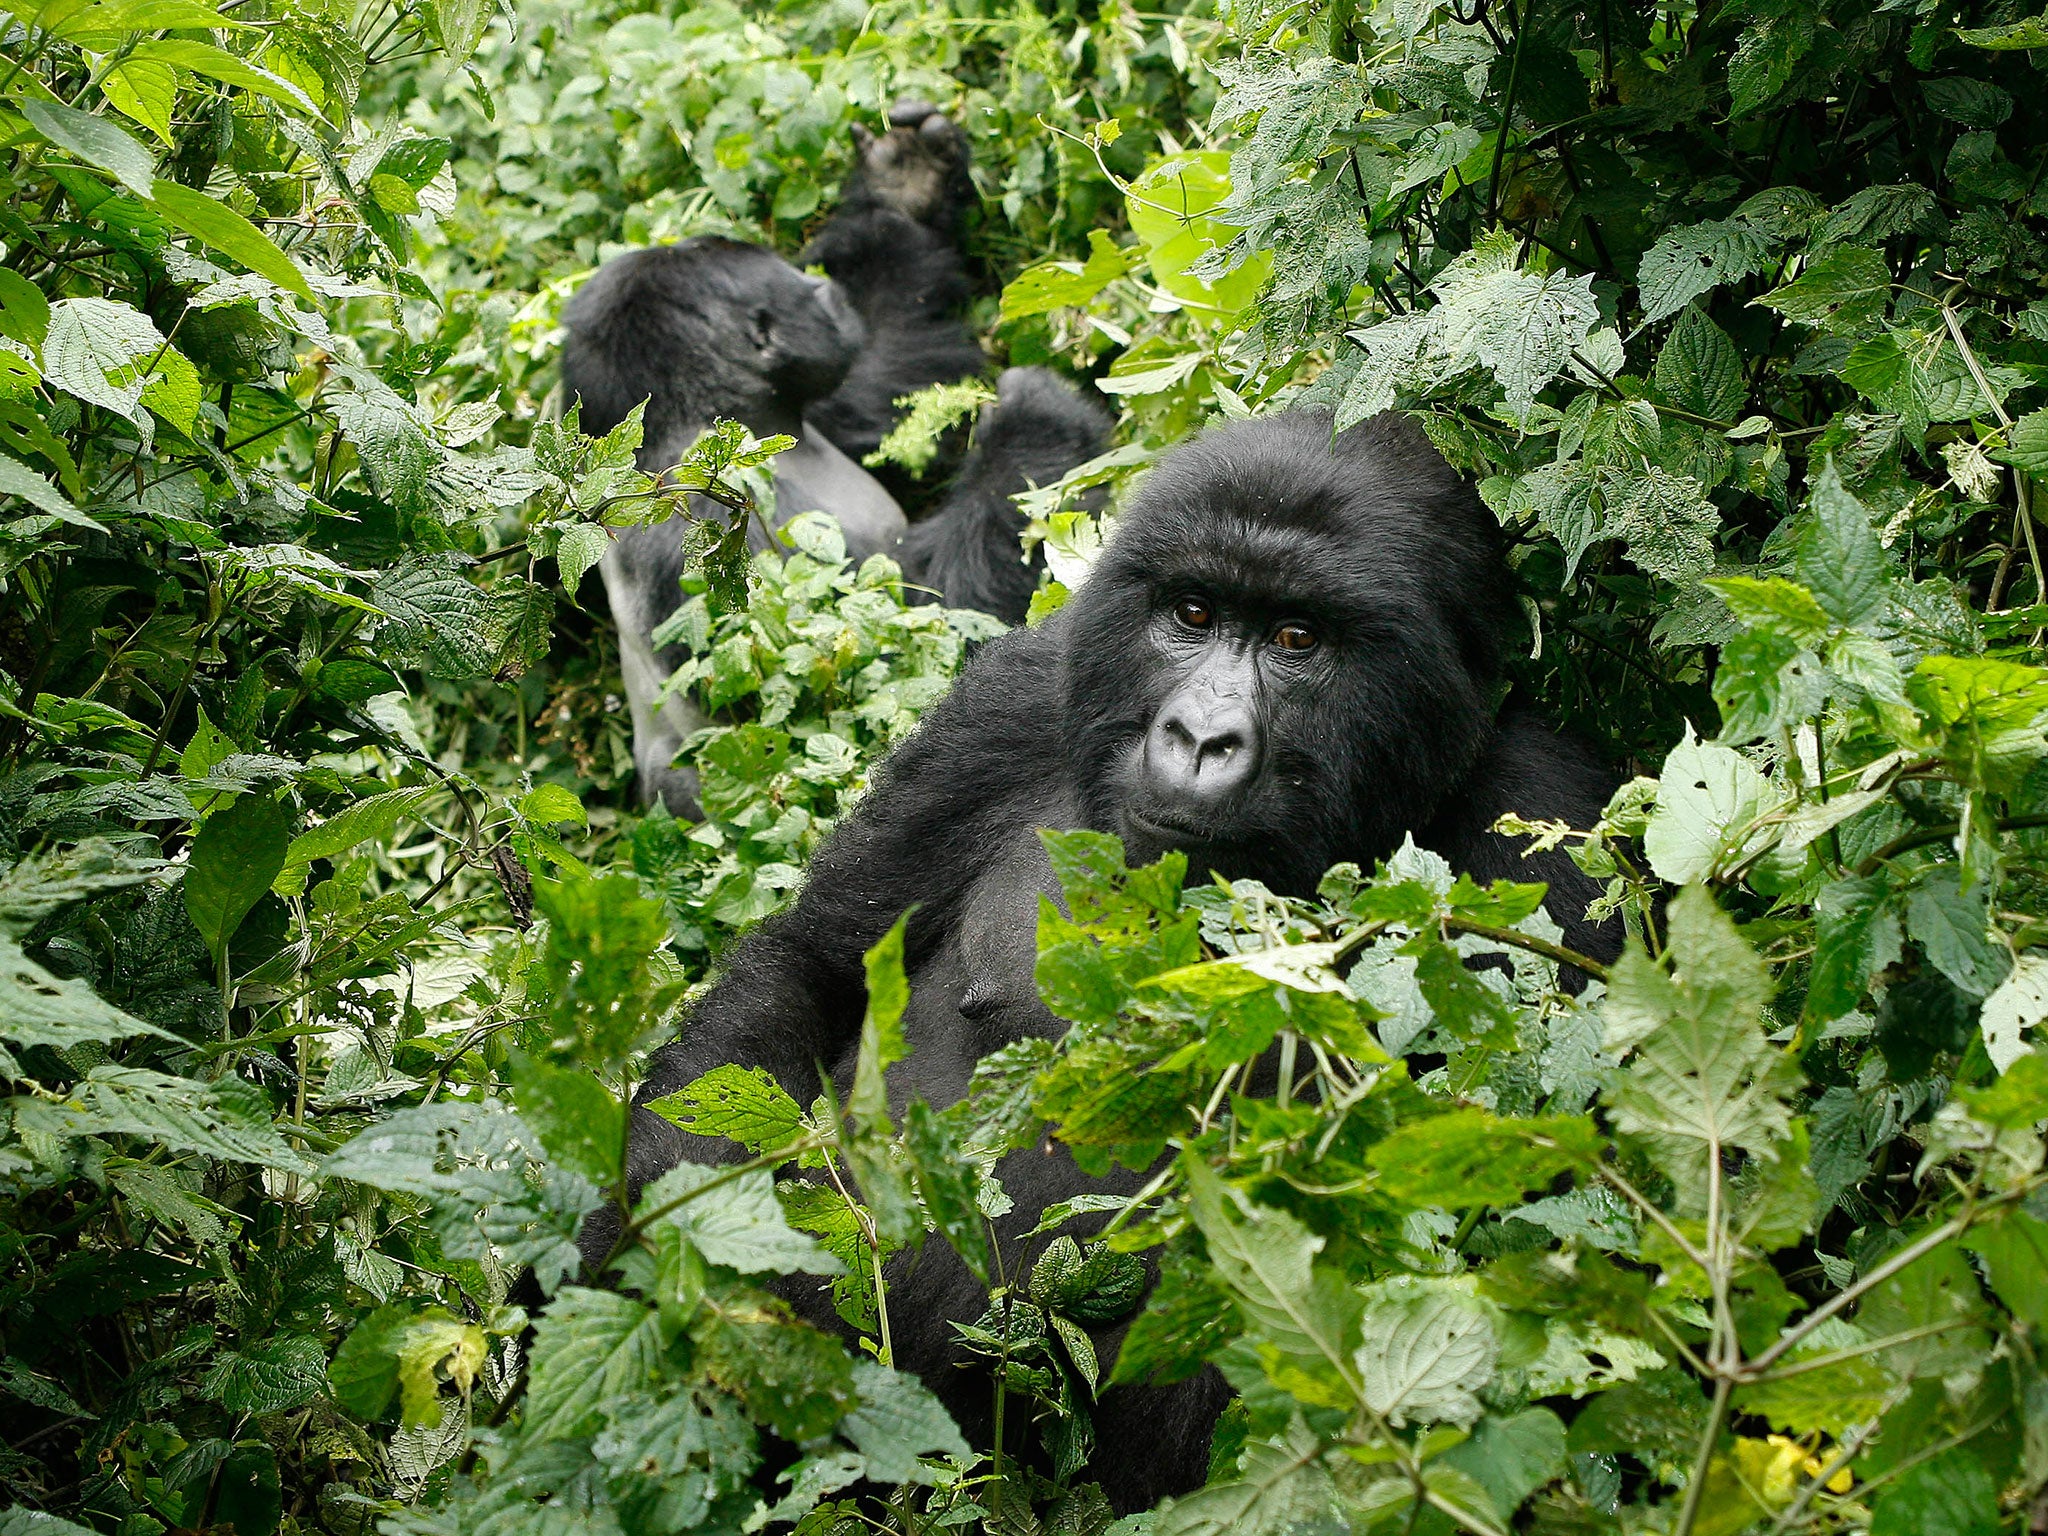 Precious Primates: The gorillas of Uganda are a major draw